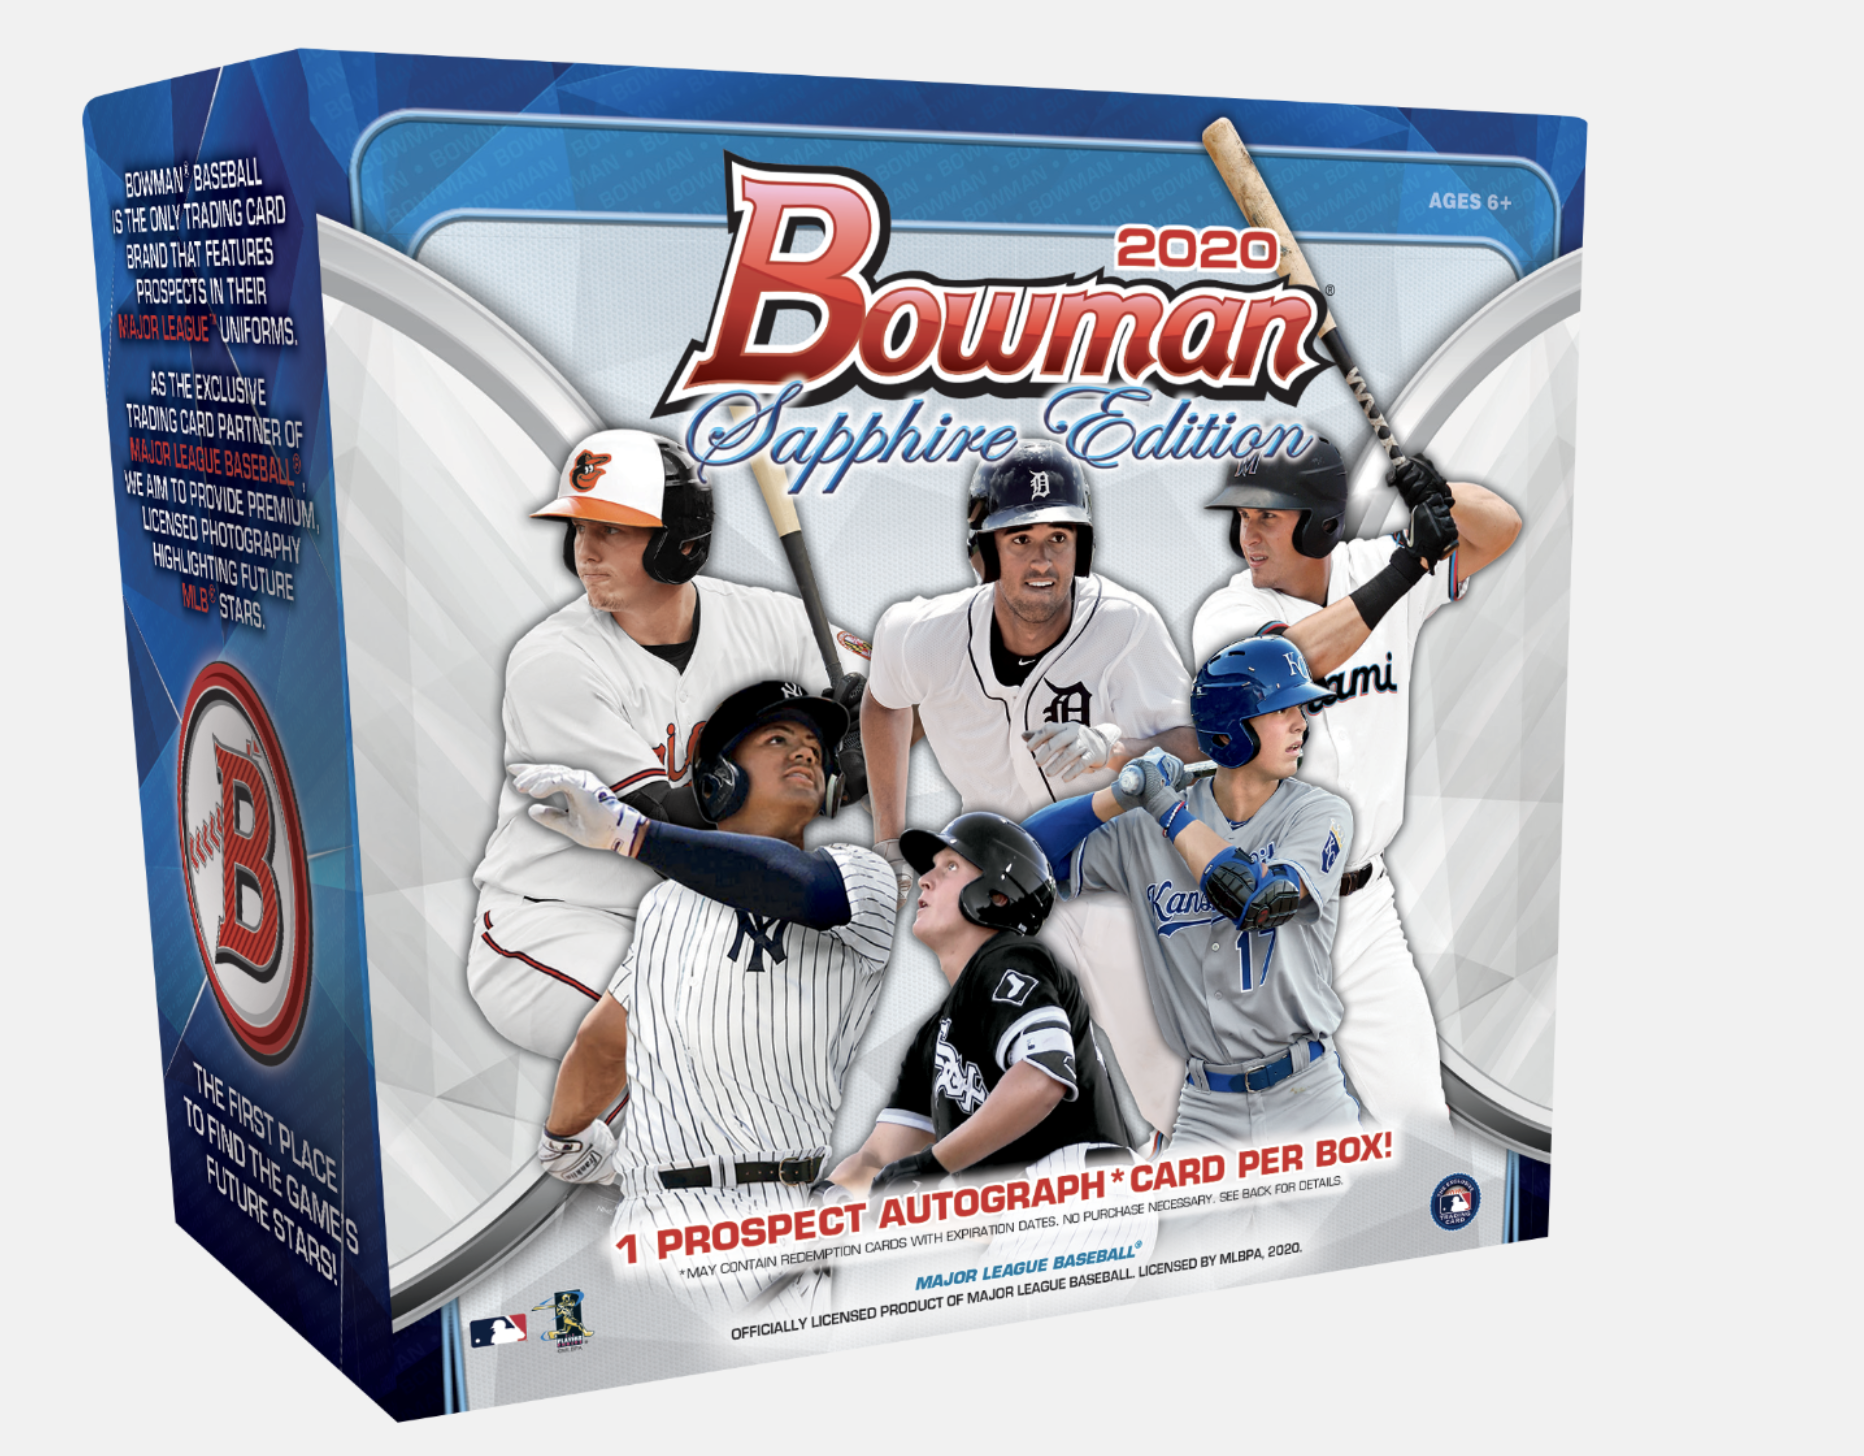 MLB 2021 Bowman サファイア ベースボール ボックス Topps